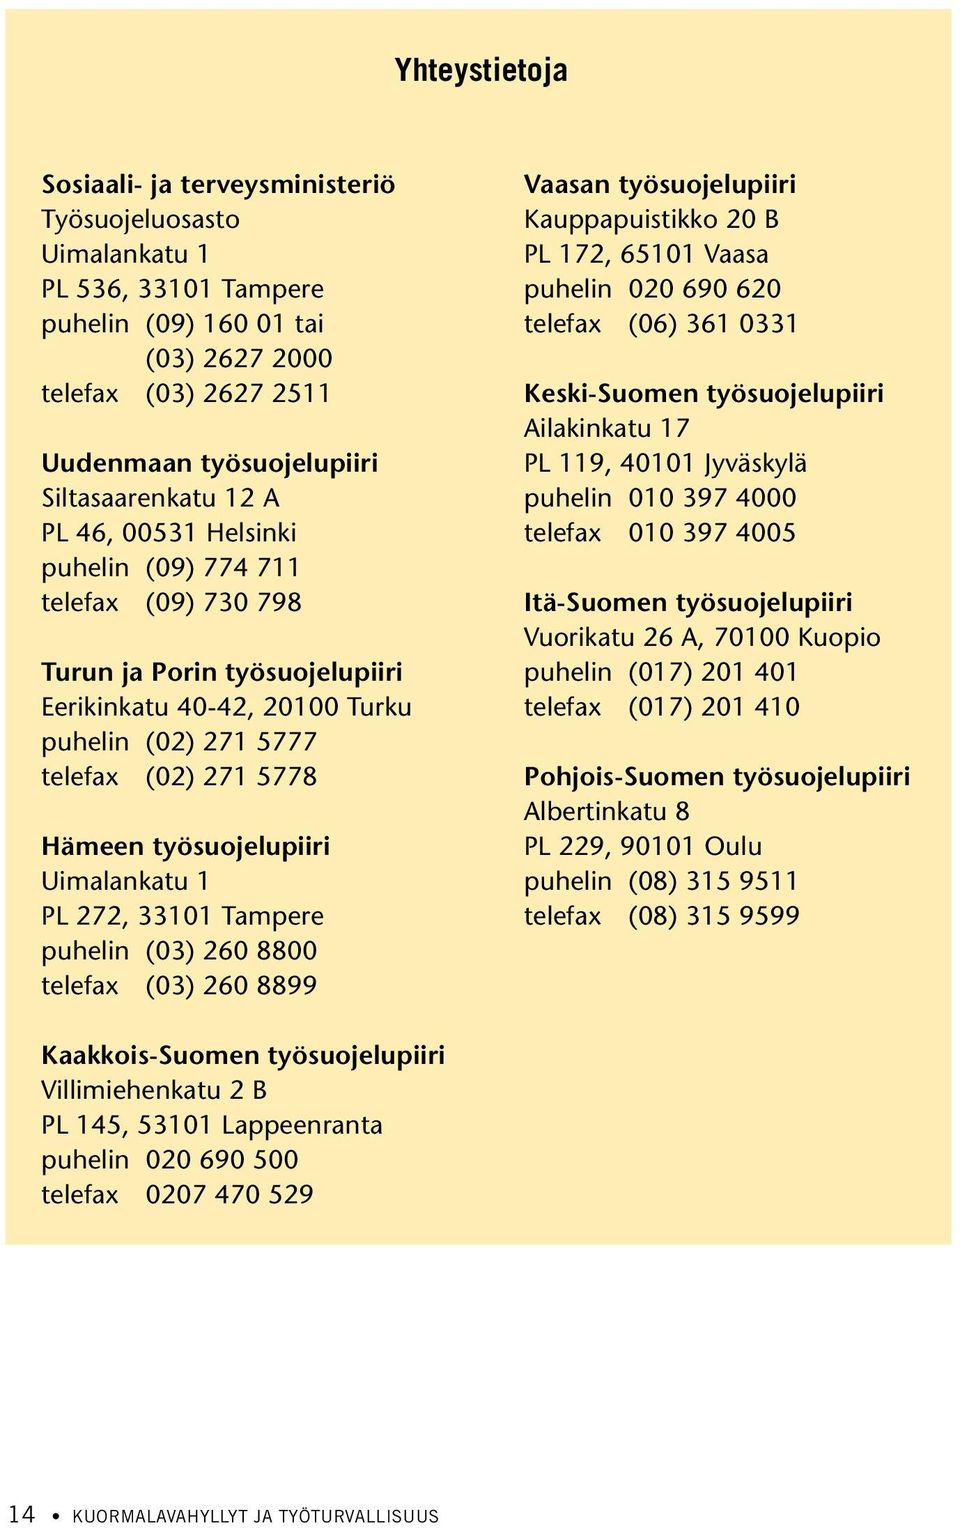 työsuojelupiiri Uimalankatu 1 PL 272, 33101 Tampere puhelin (03) 260 8800 telefax (03) 260 8899 Vaasan työsuojelupiiri Kauppapuistikko 20 B PL 172, 65101 Vaasa puhelin 020 690 620 telefax (06) 361